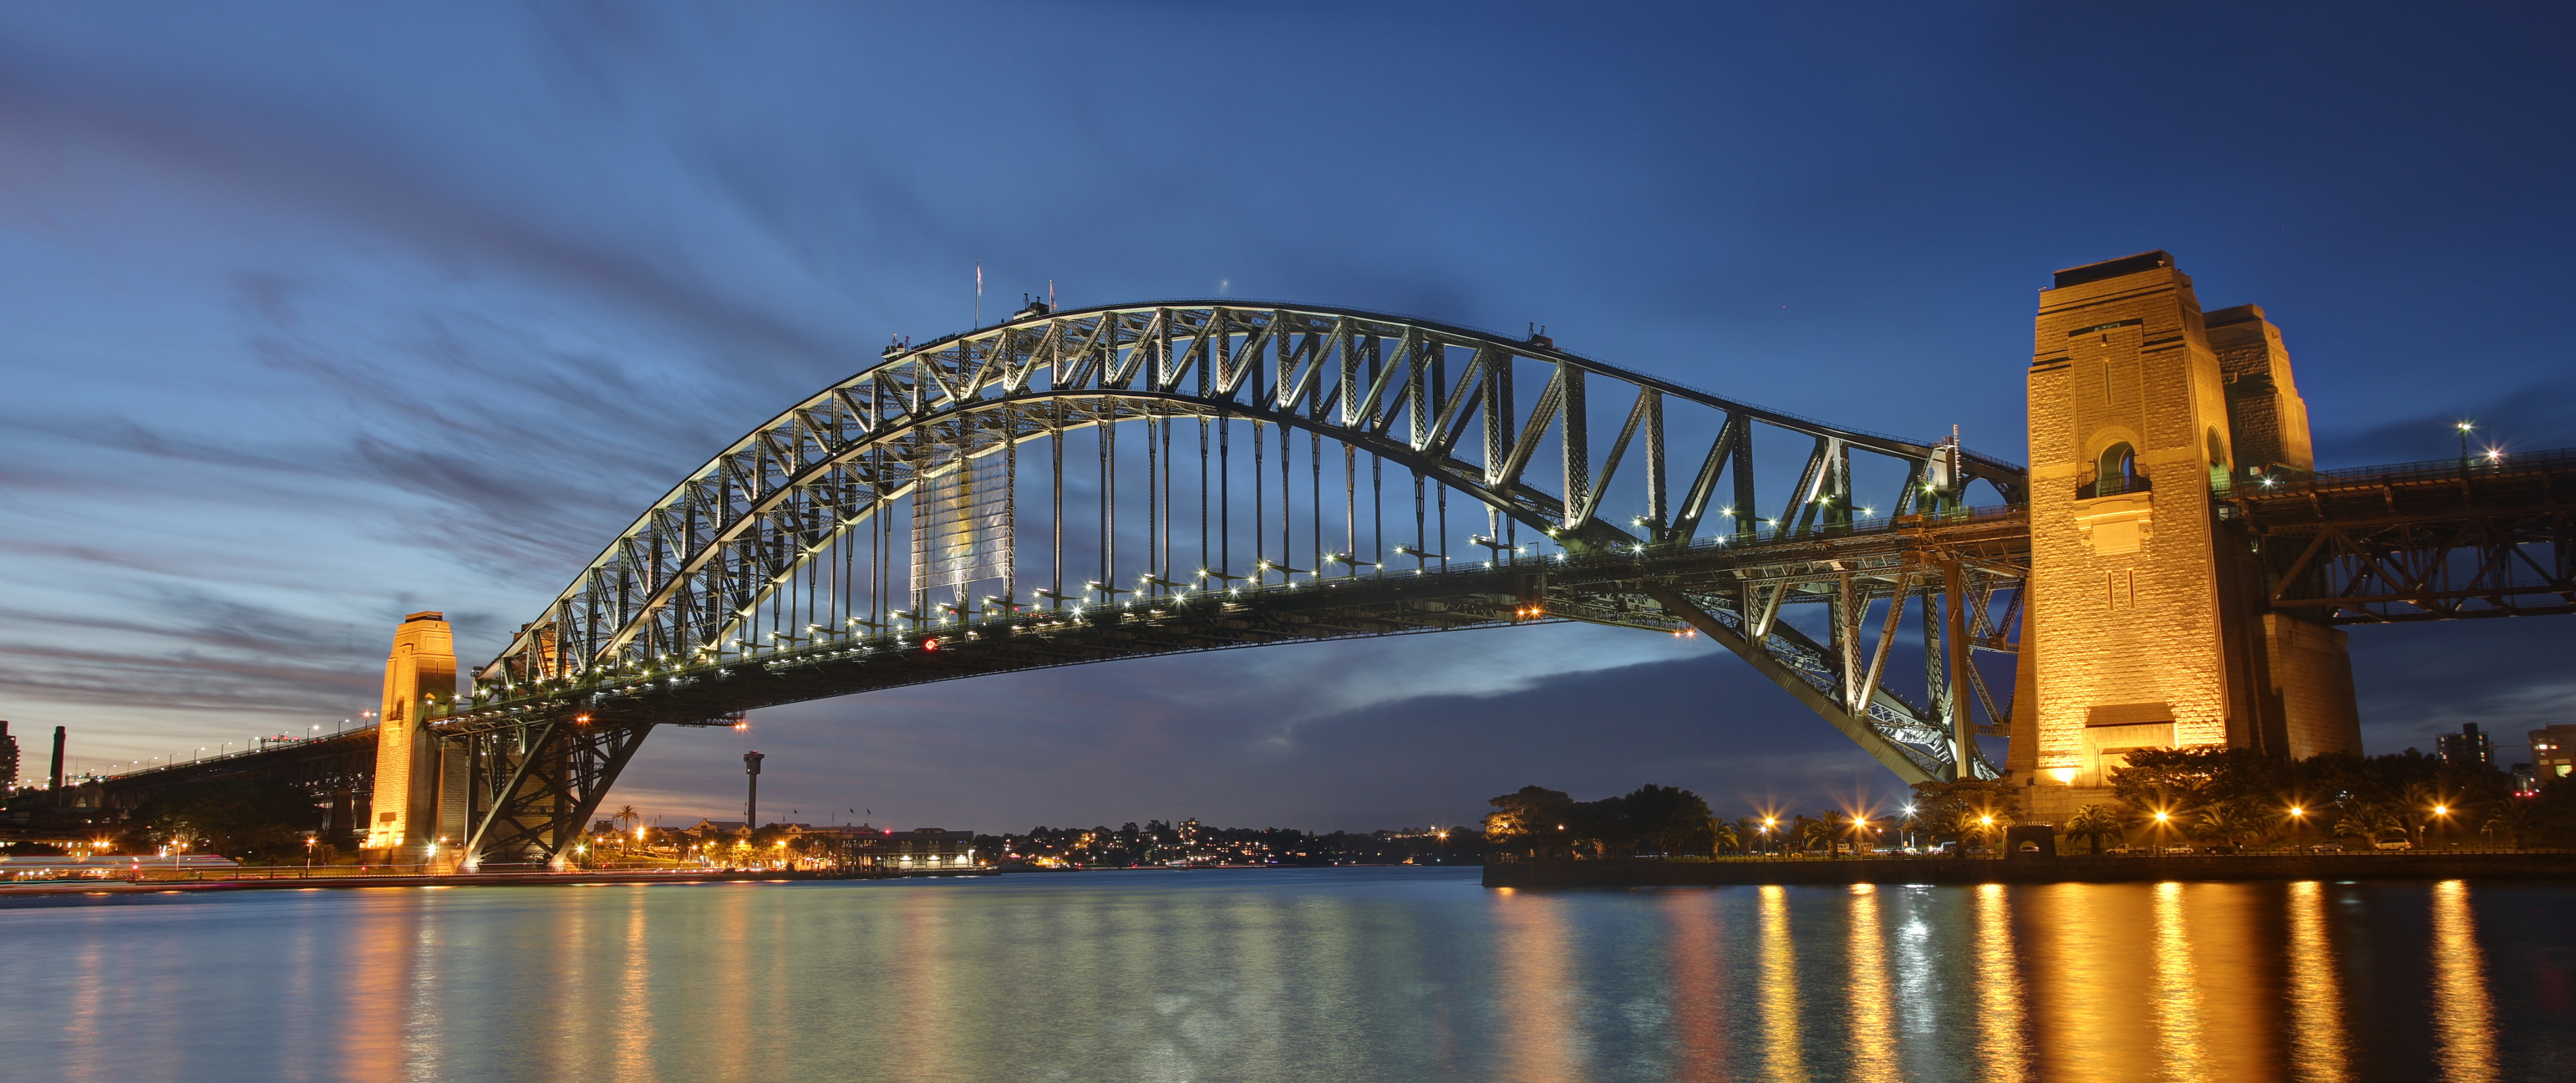 Sydney Harbor Bridge, Architectural marvel, City landmark, Jooinn, 3090x1300 Dual Screen Desktop